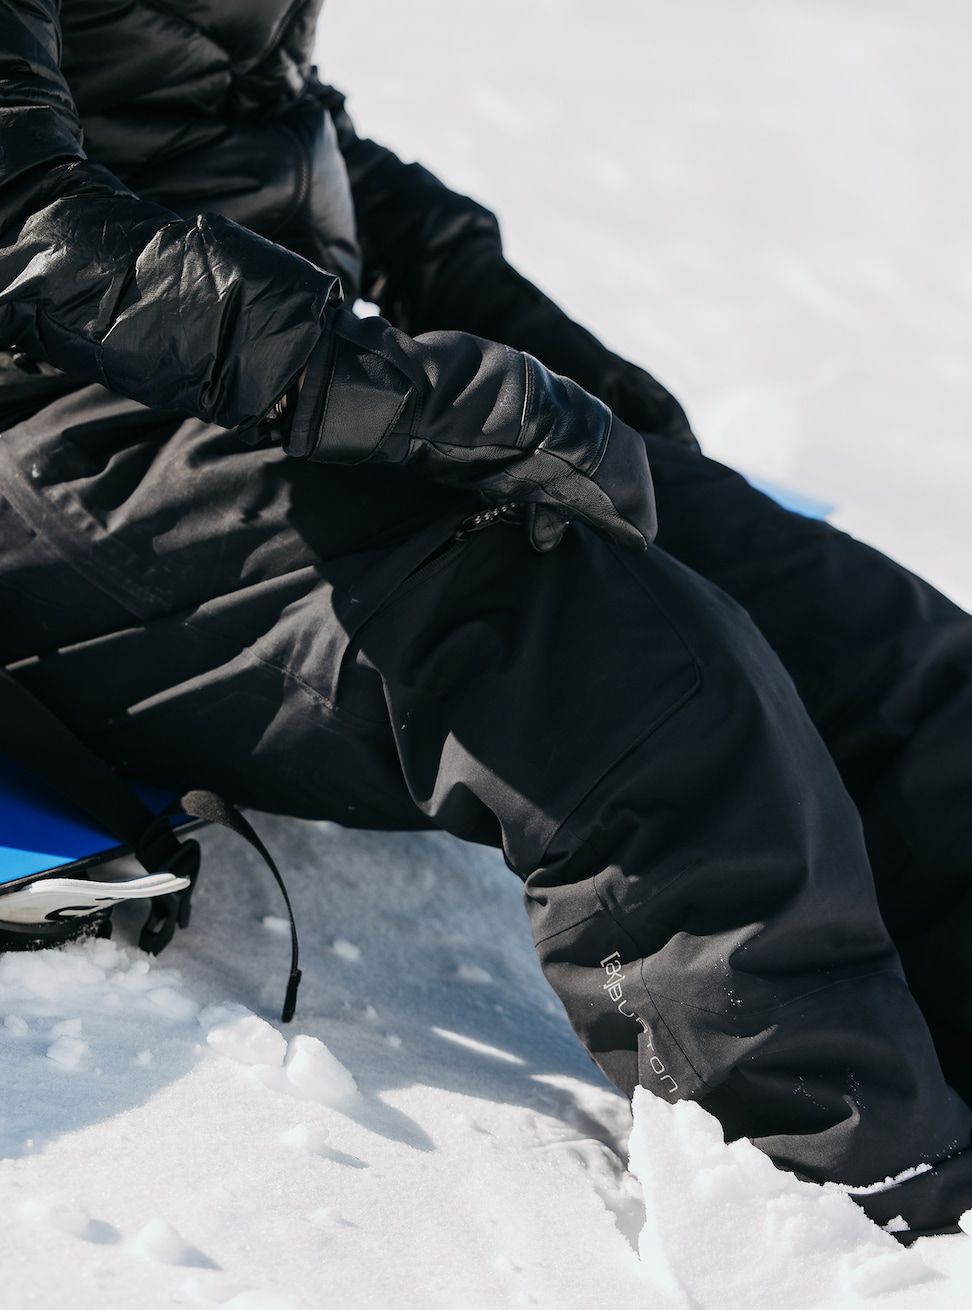 Summit - Technical Snow Bib Pants for Women